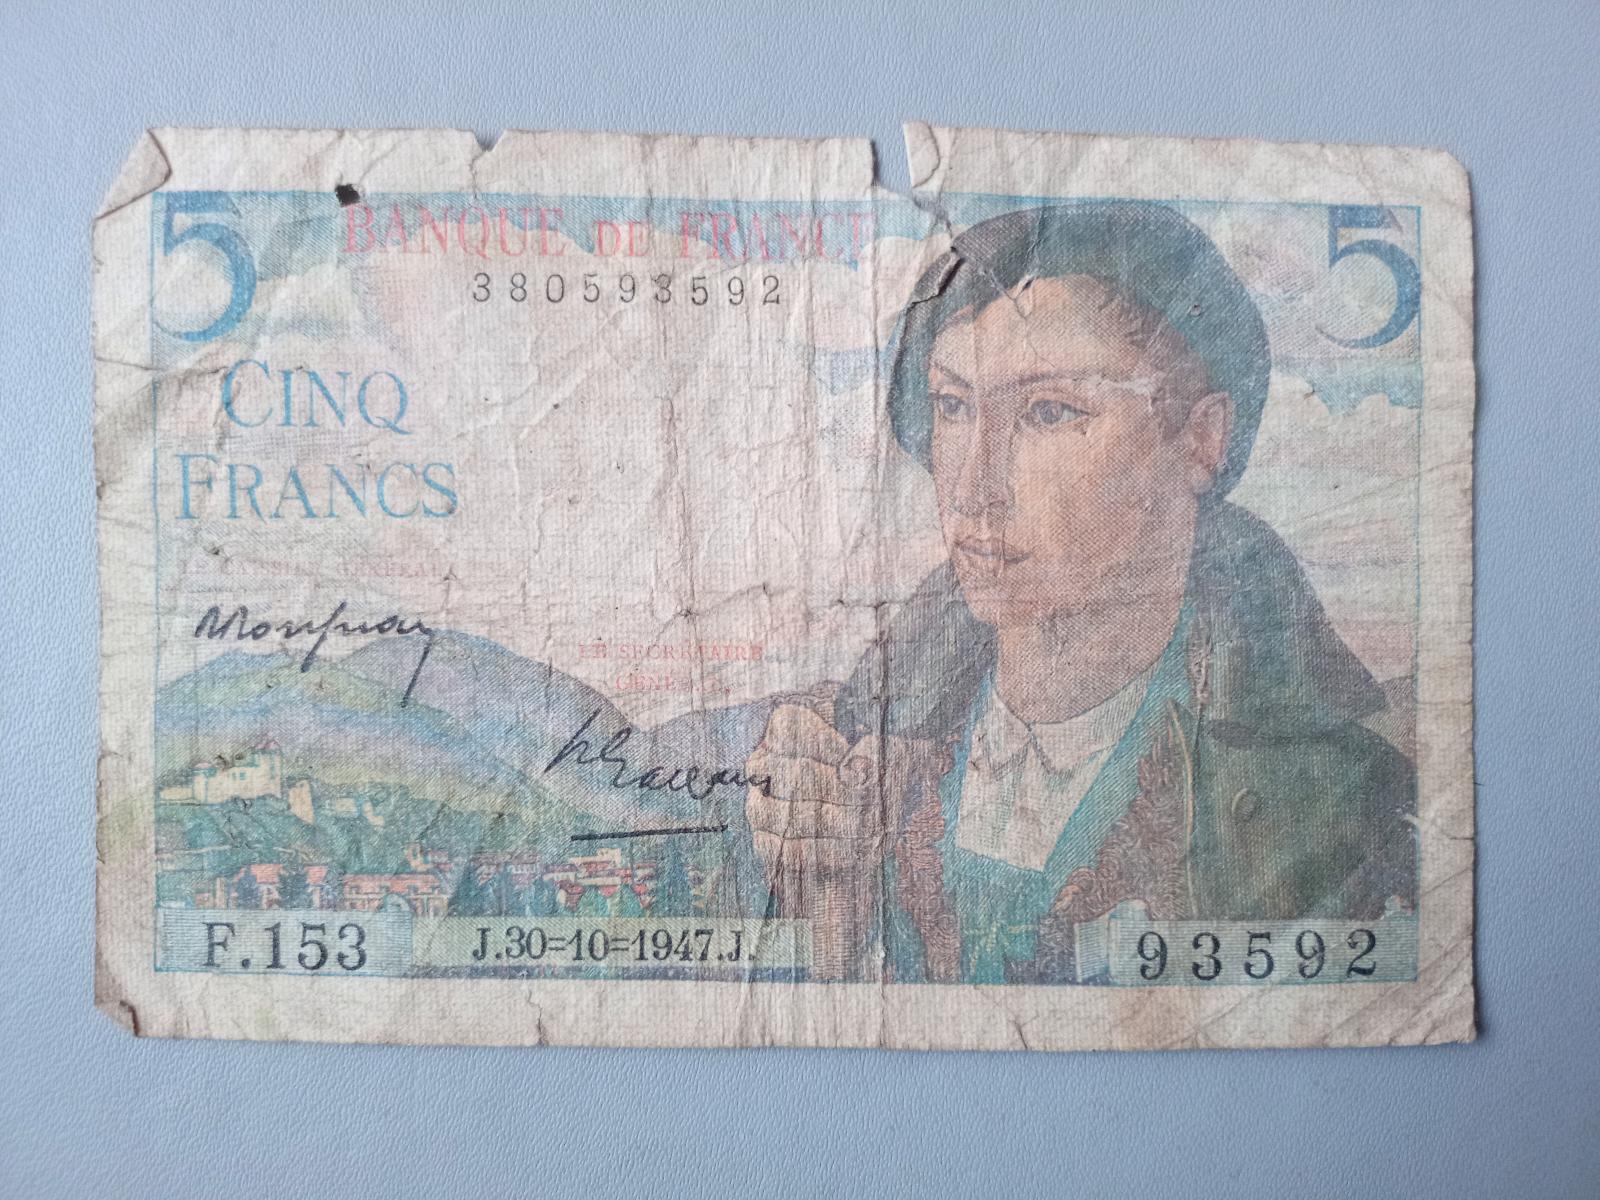 5 francs Francúzsko 1947. - Bankovky